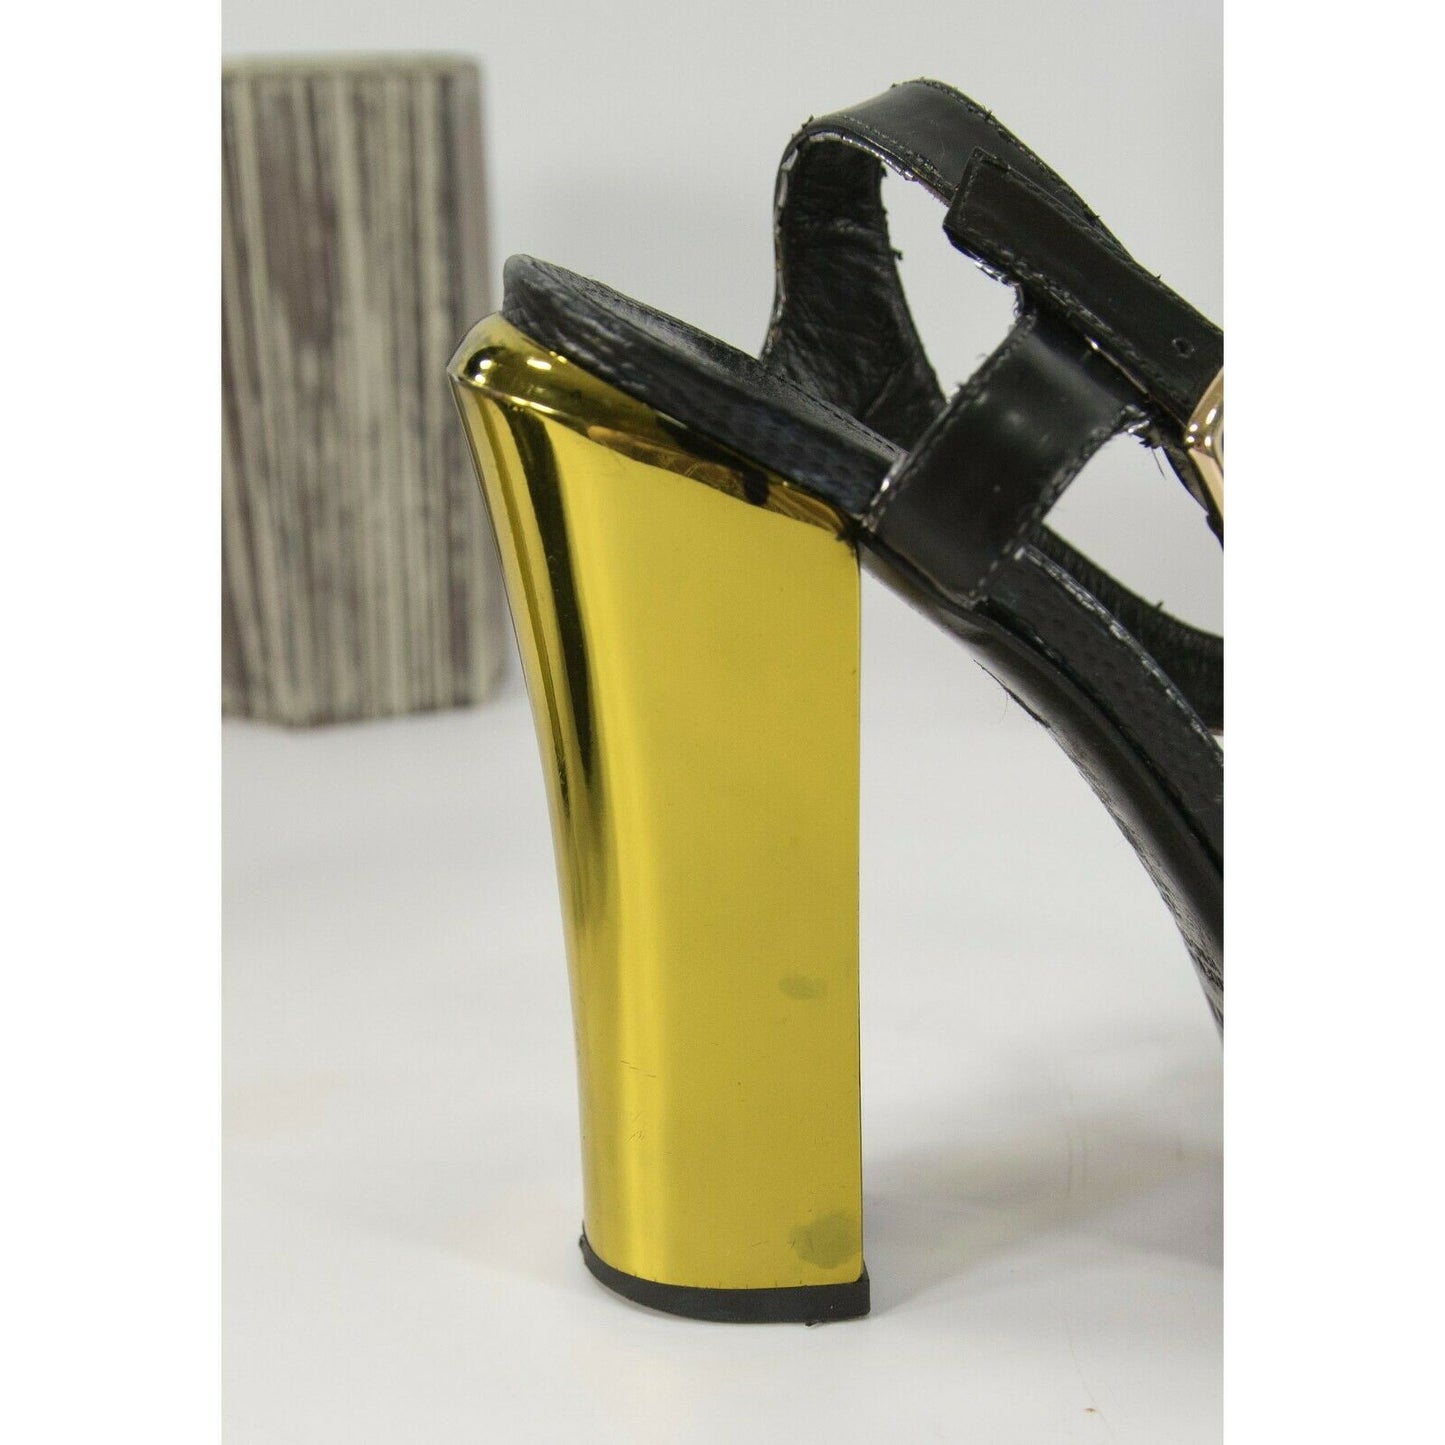 Fendi Gold Black Satin Mirror Platform Pumps Size 37.5 7.5 DEFECT!